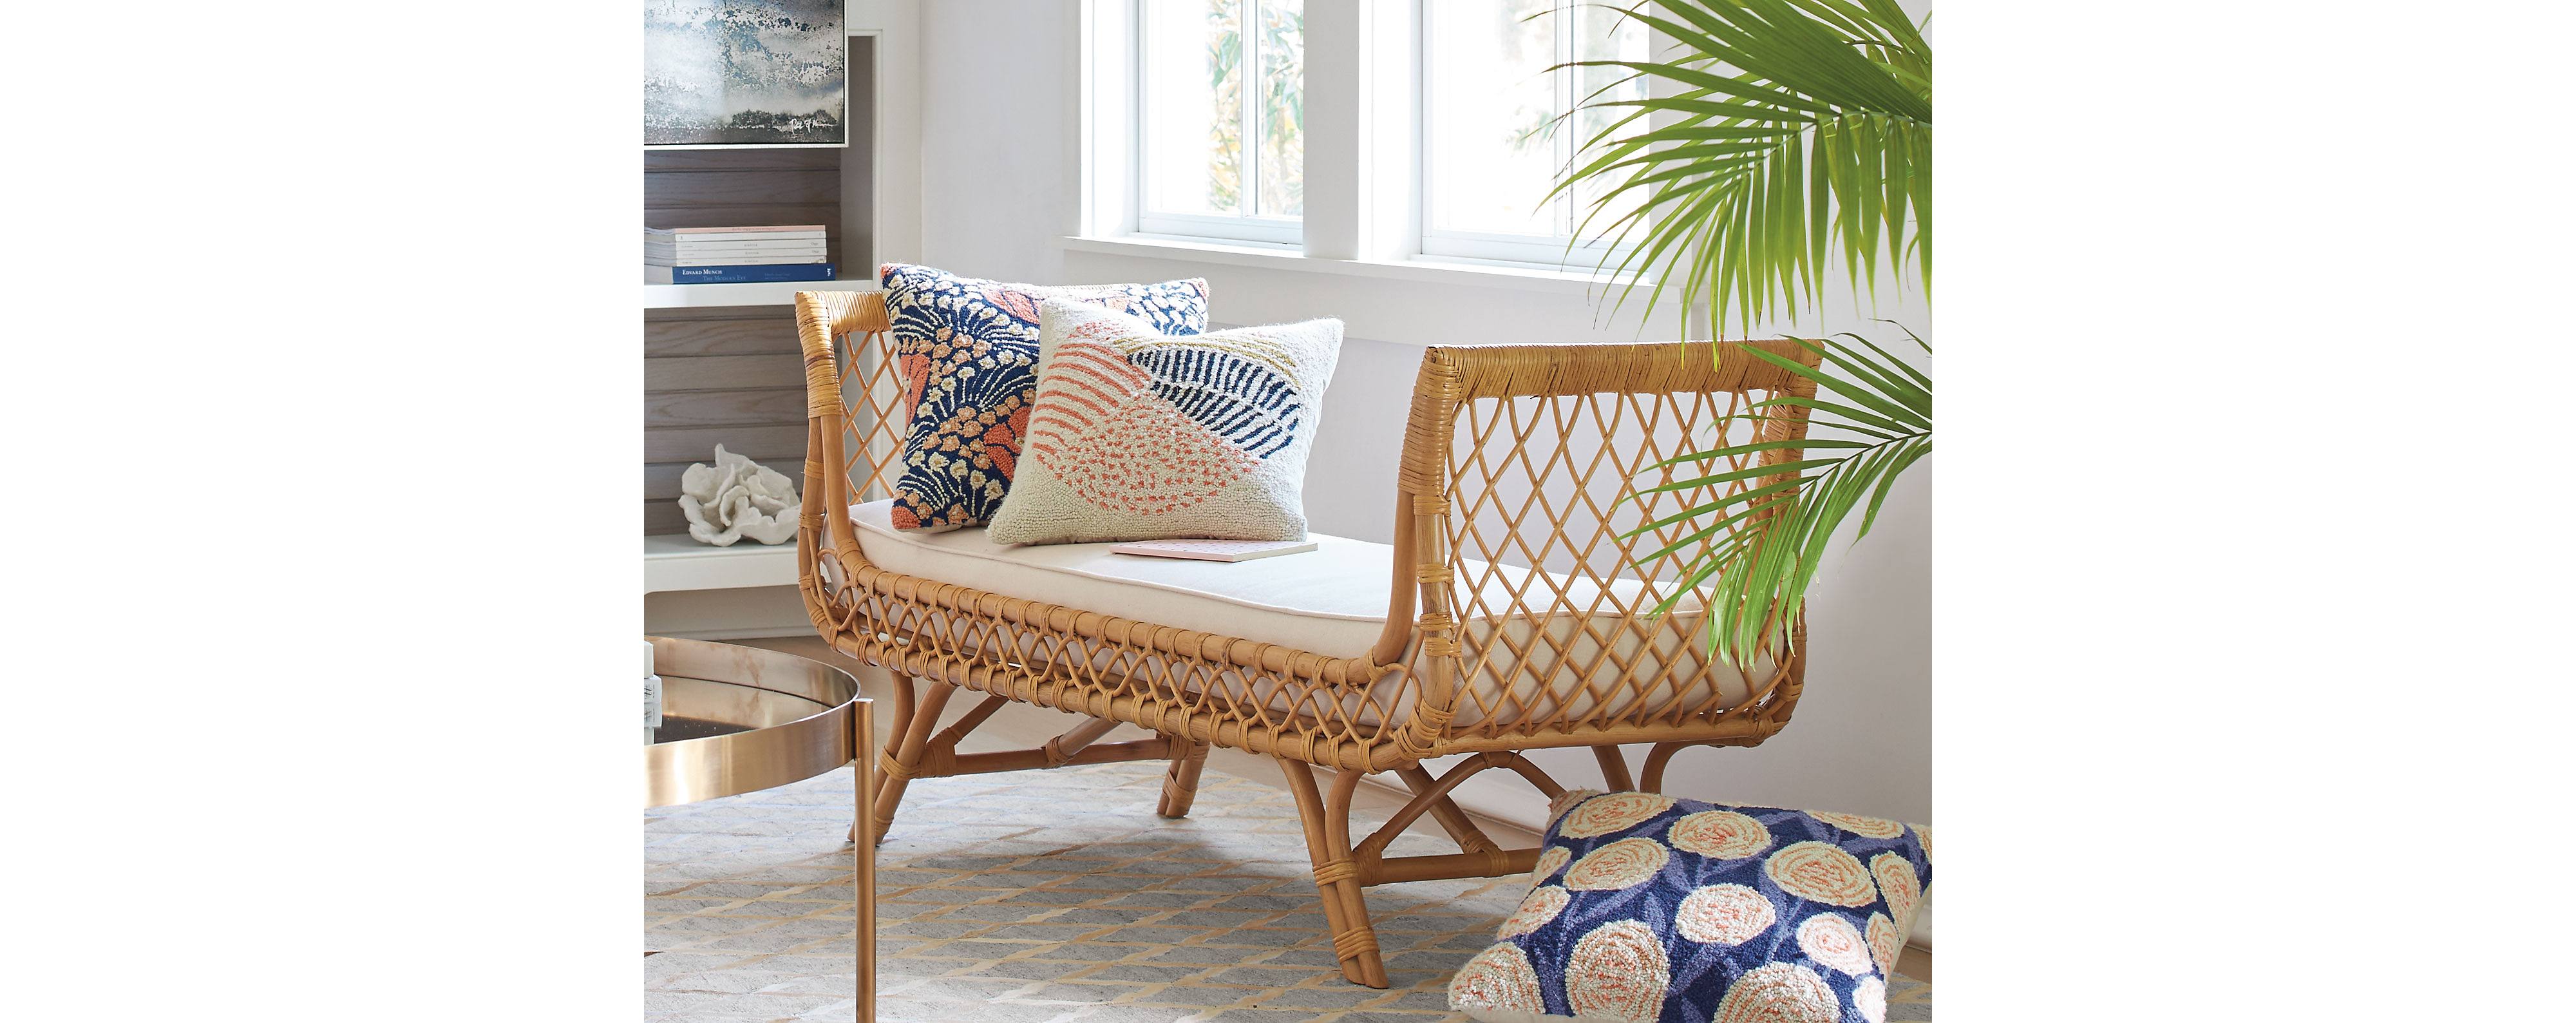 living room rattan furniture design